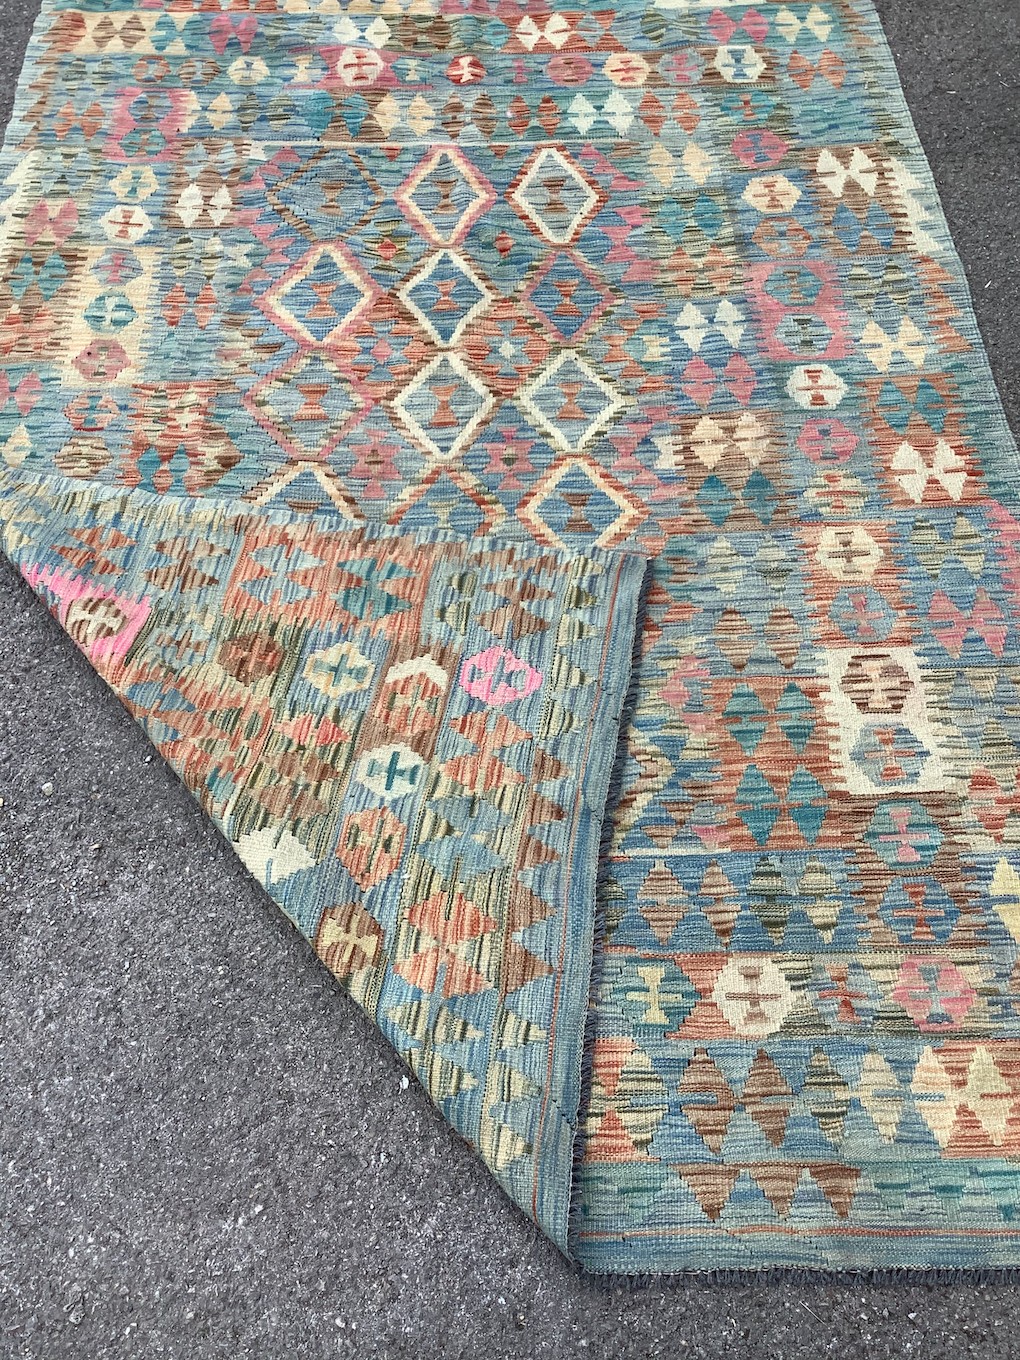 An Anatolian design polychrome flatweave Kilim carpet, 249 x 177cm 249cm x 177cm